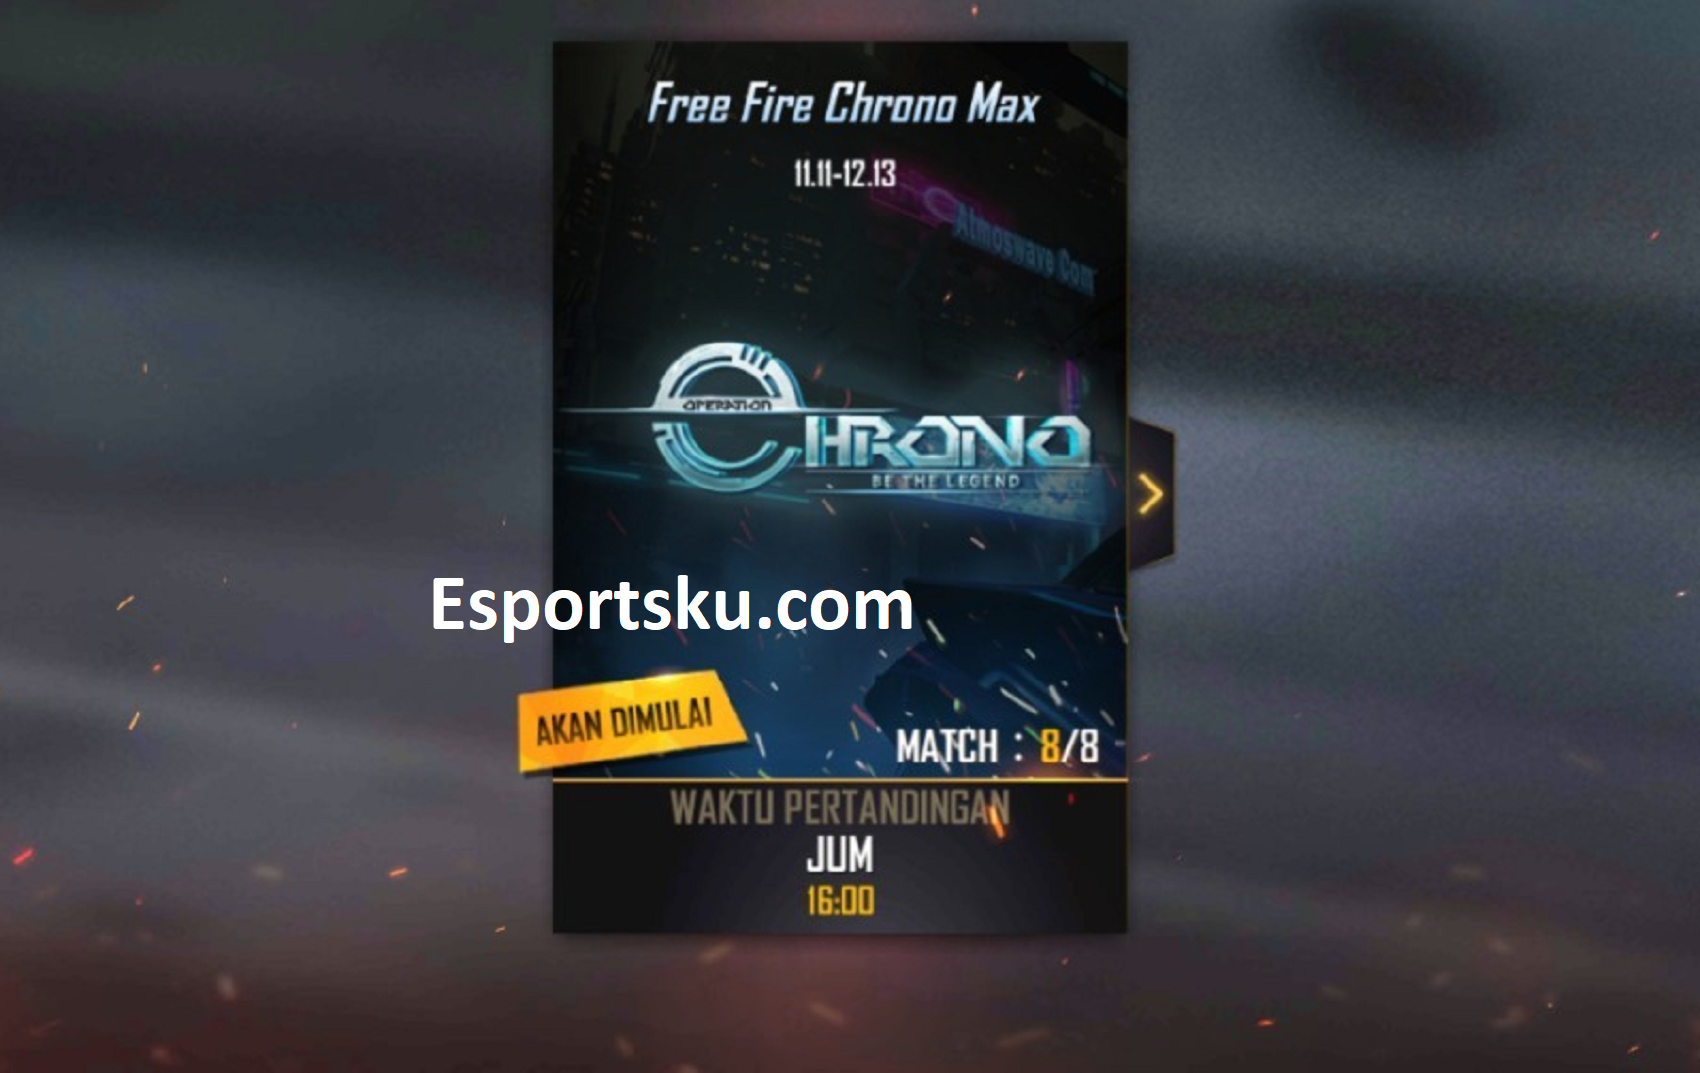 Tournament Spesial Free Fire (FF) Chrono Max